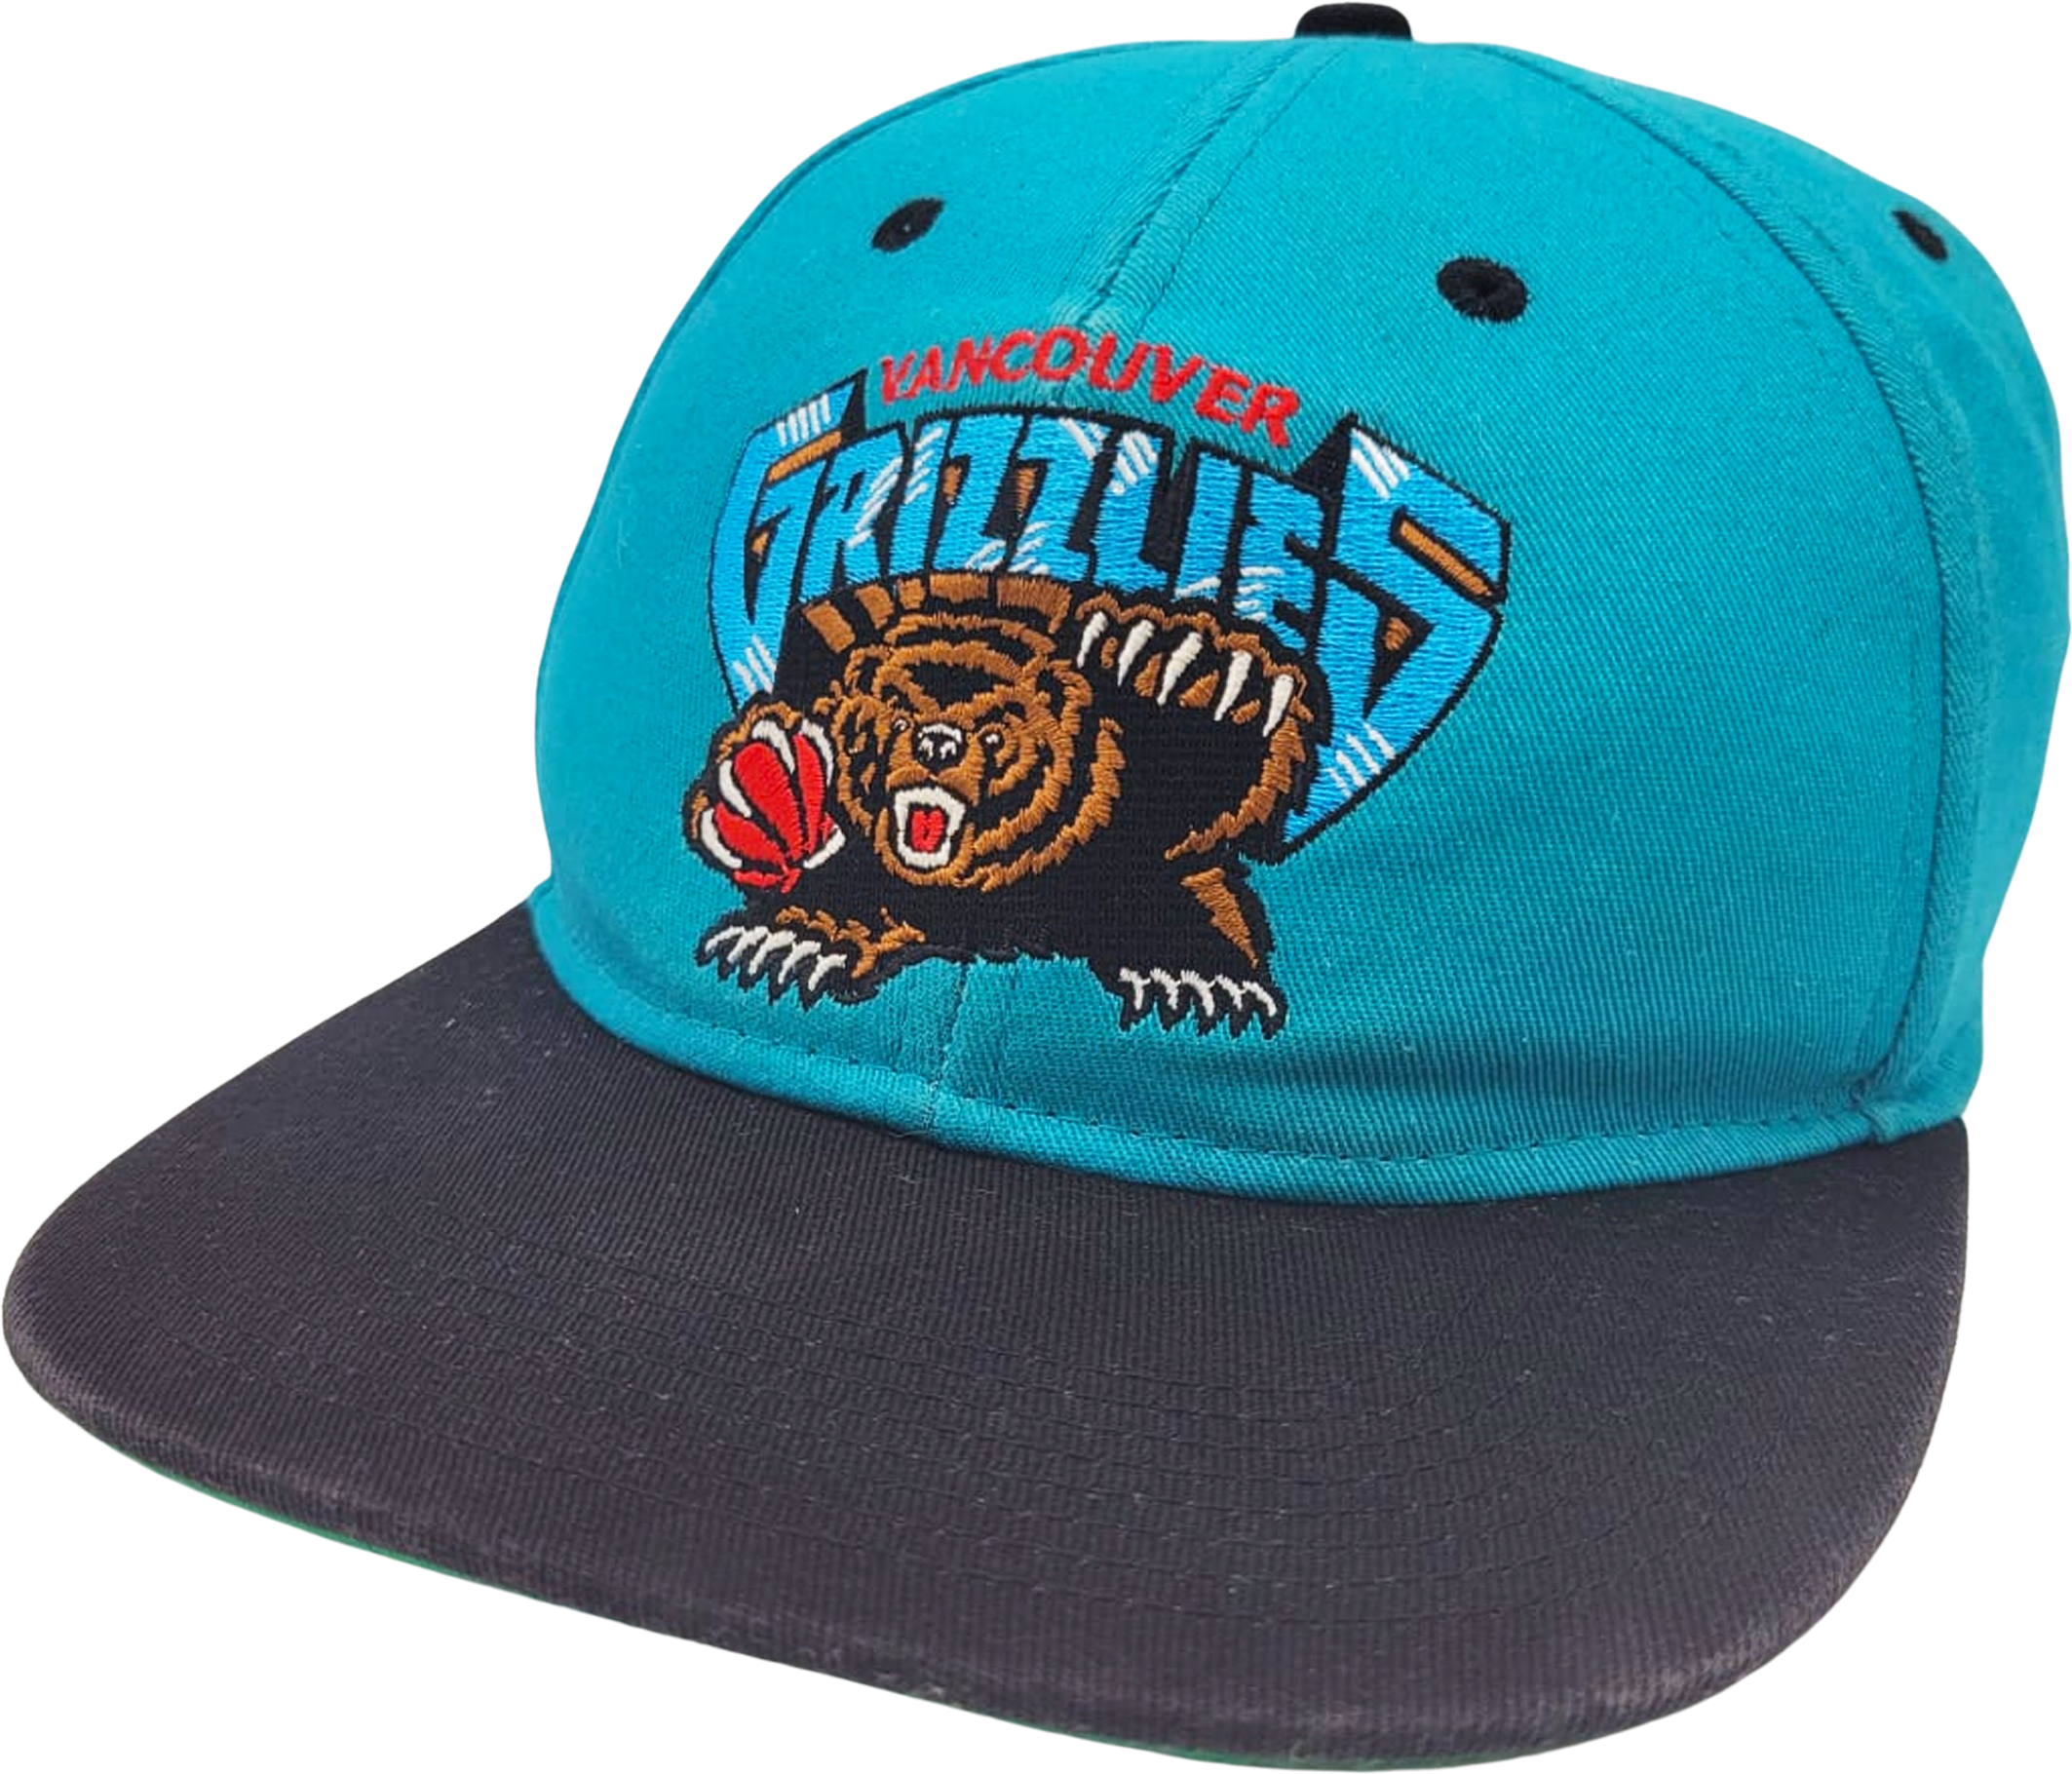 Vancouver Grizzlies Hat Cap Snapback New Era Men NBA Basketball Black Retro